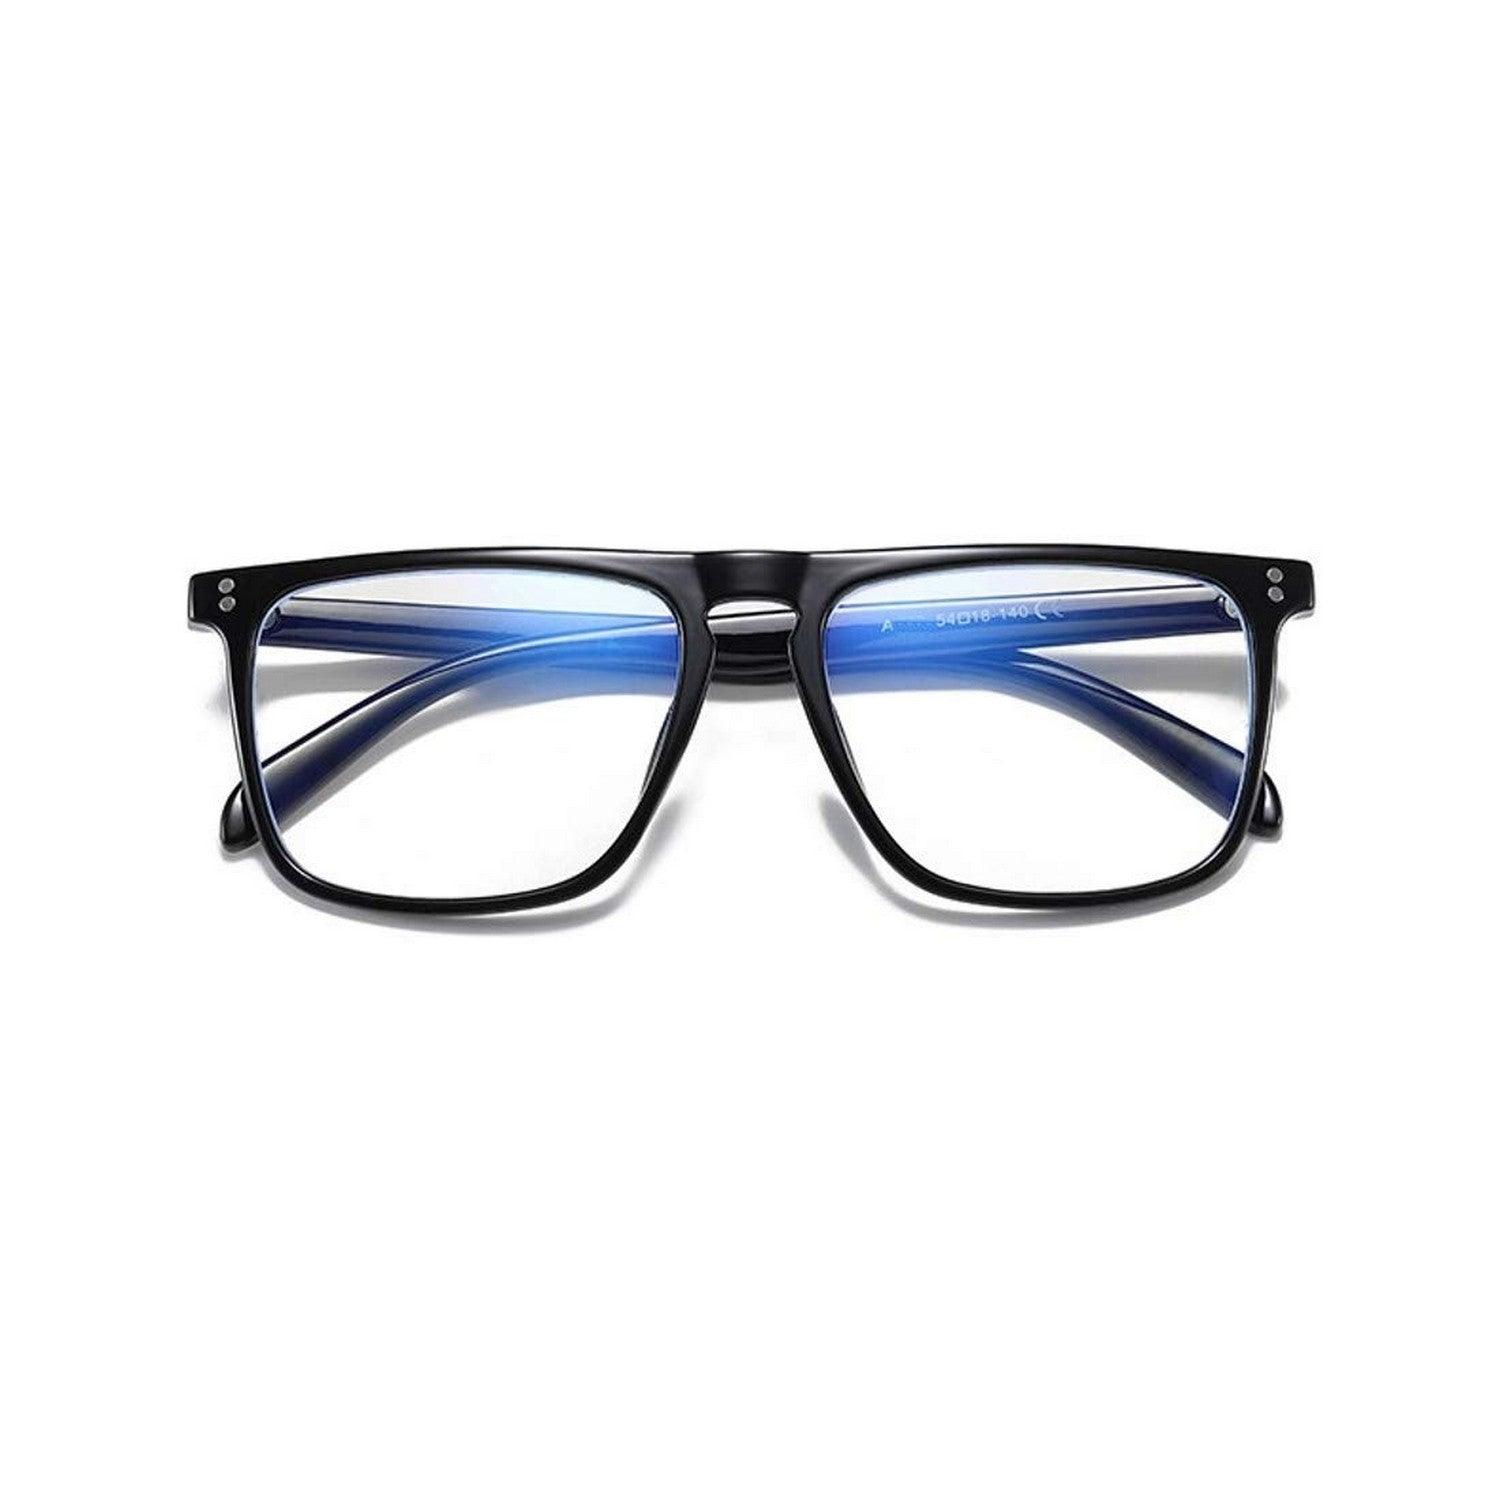 Blue Light Blocking Blue Cut anti-glare Square Eyeglasses, Robert Downey Jr Frame for Eye Protection from UV by Computer/Tablet/Laptop/Mobile - Dervin